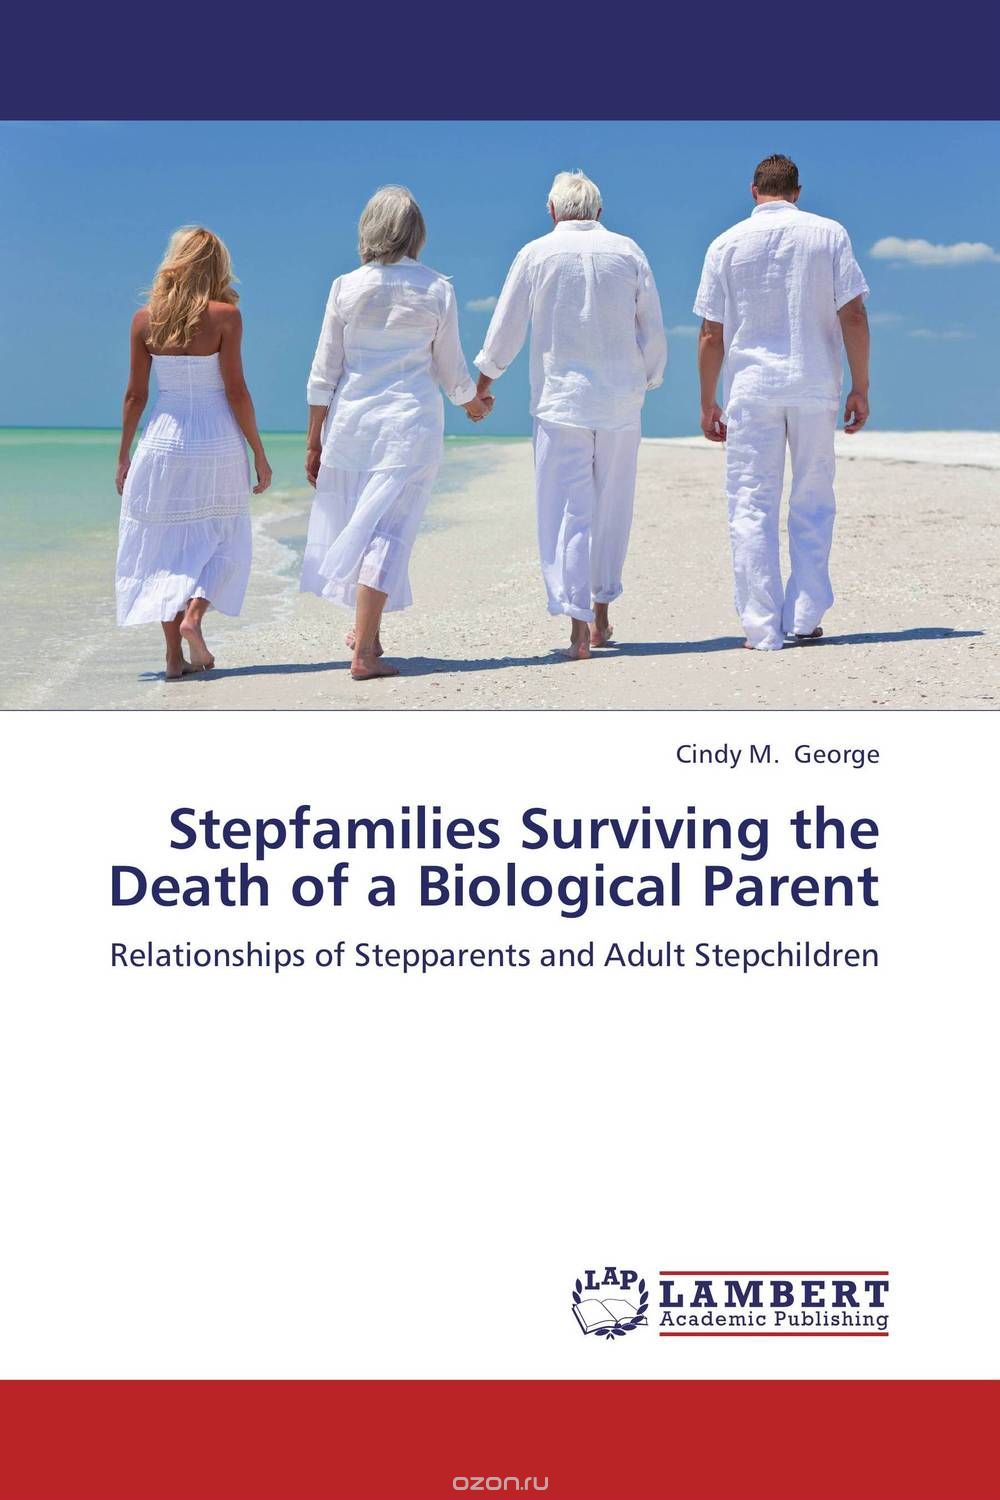 Скачать книгу "Stepfamilies Surviving the Death of a Biological Parent"